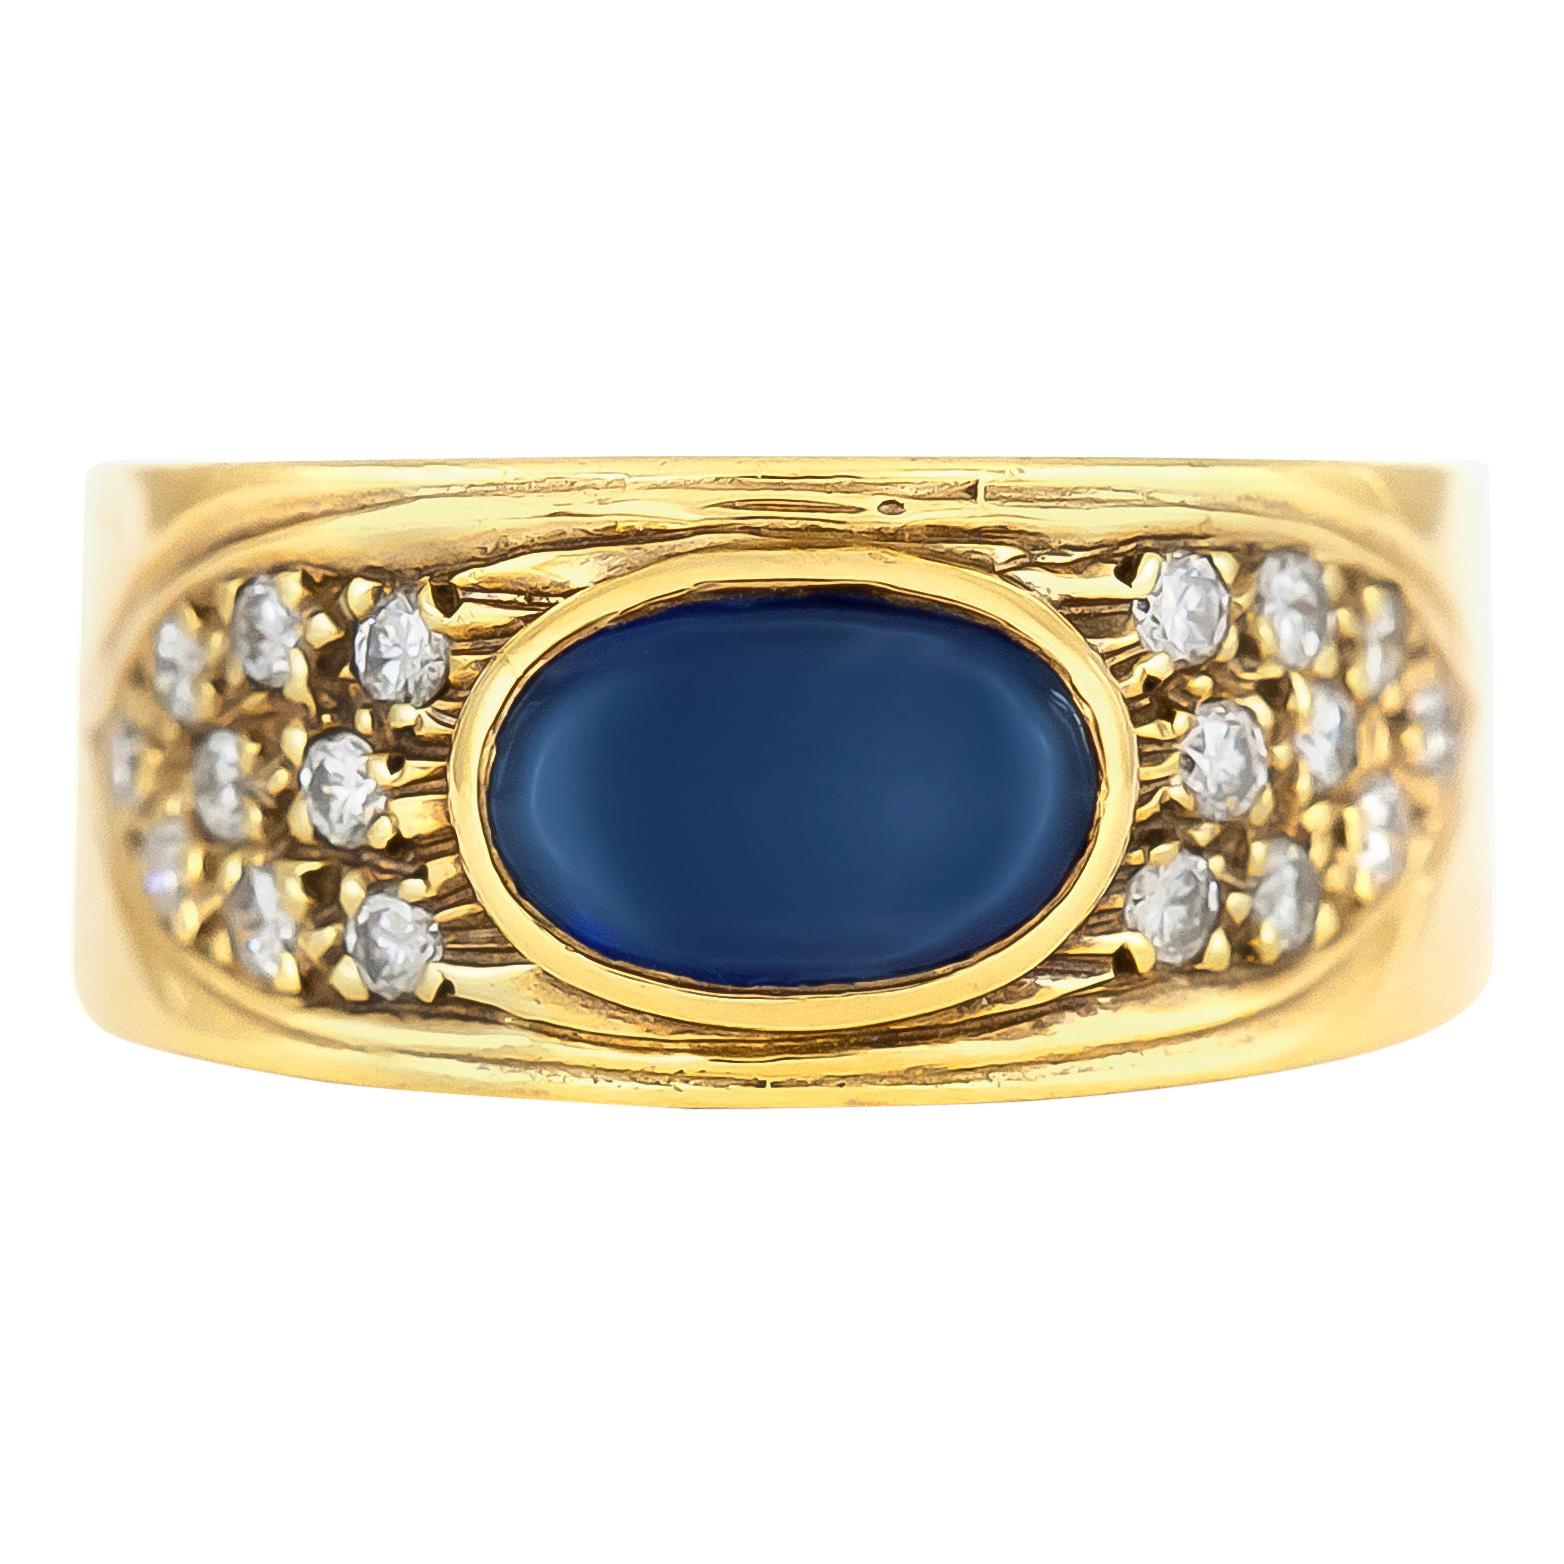 Oval Sapphire on 18 Karat Yellow Gold Setting with Diamonds